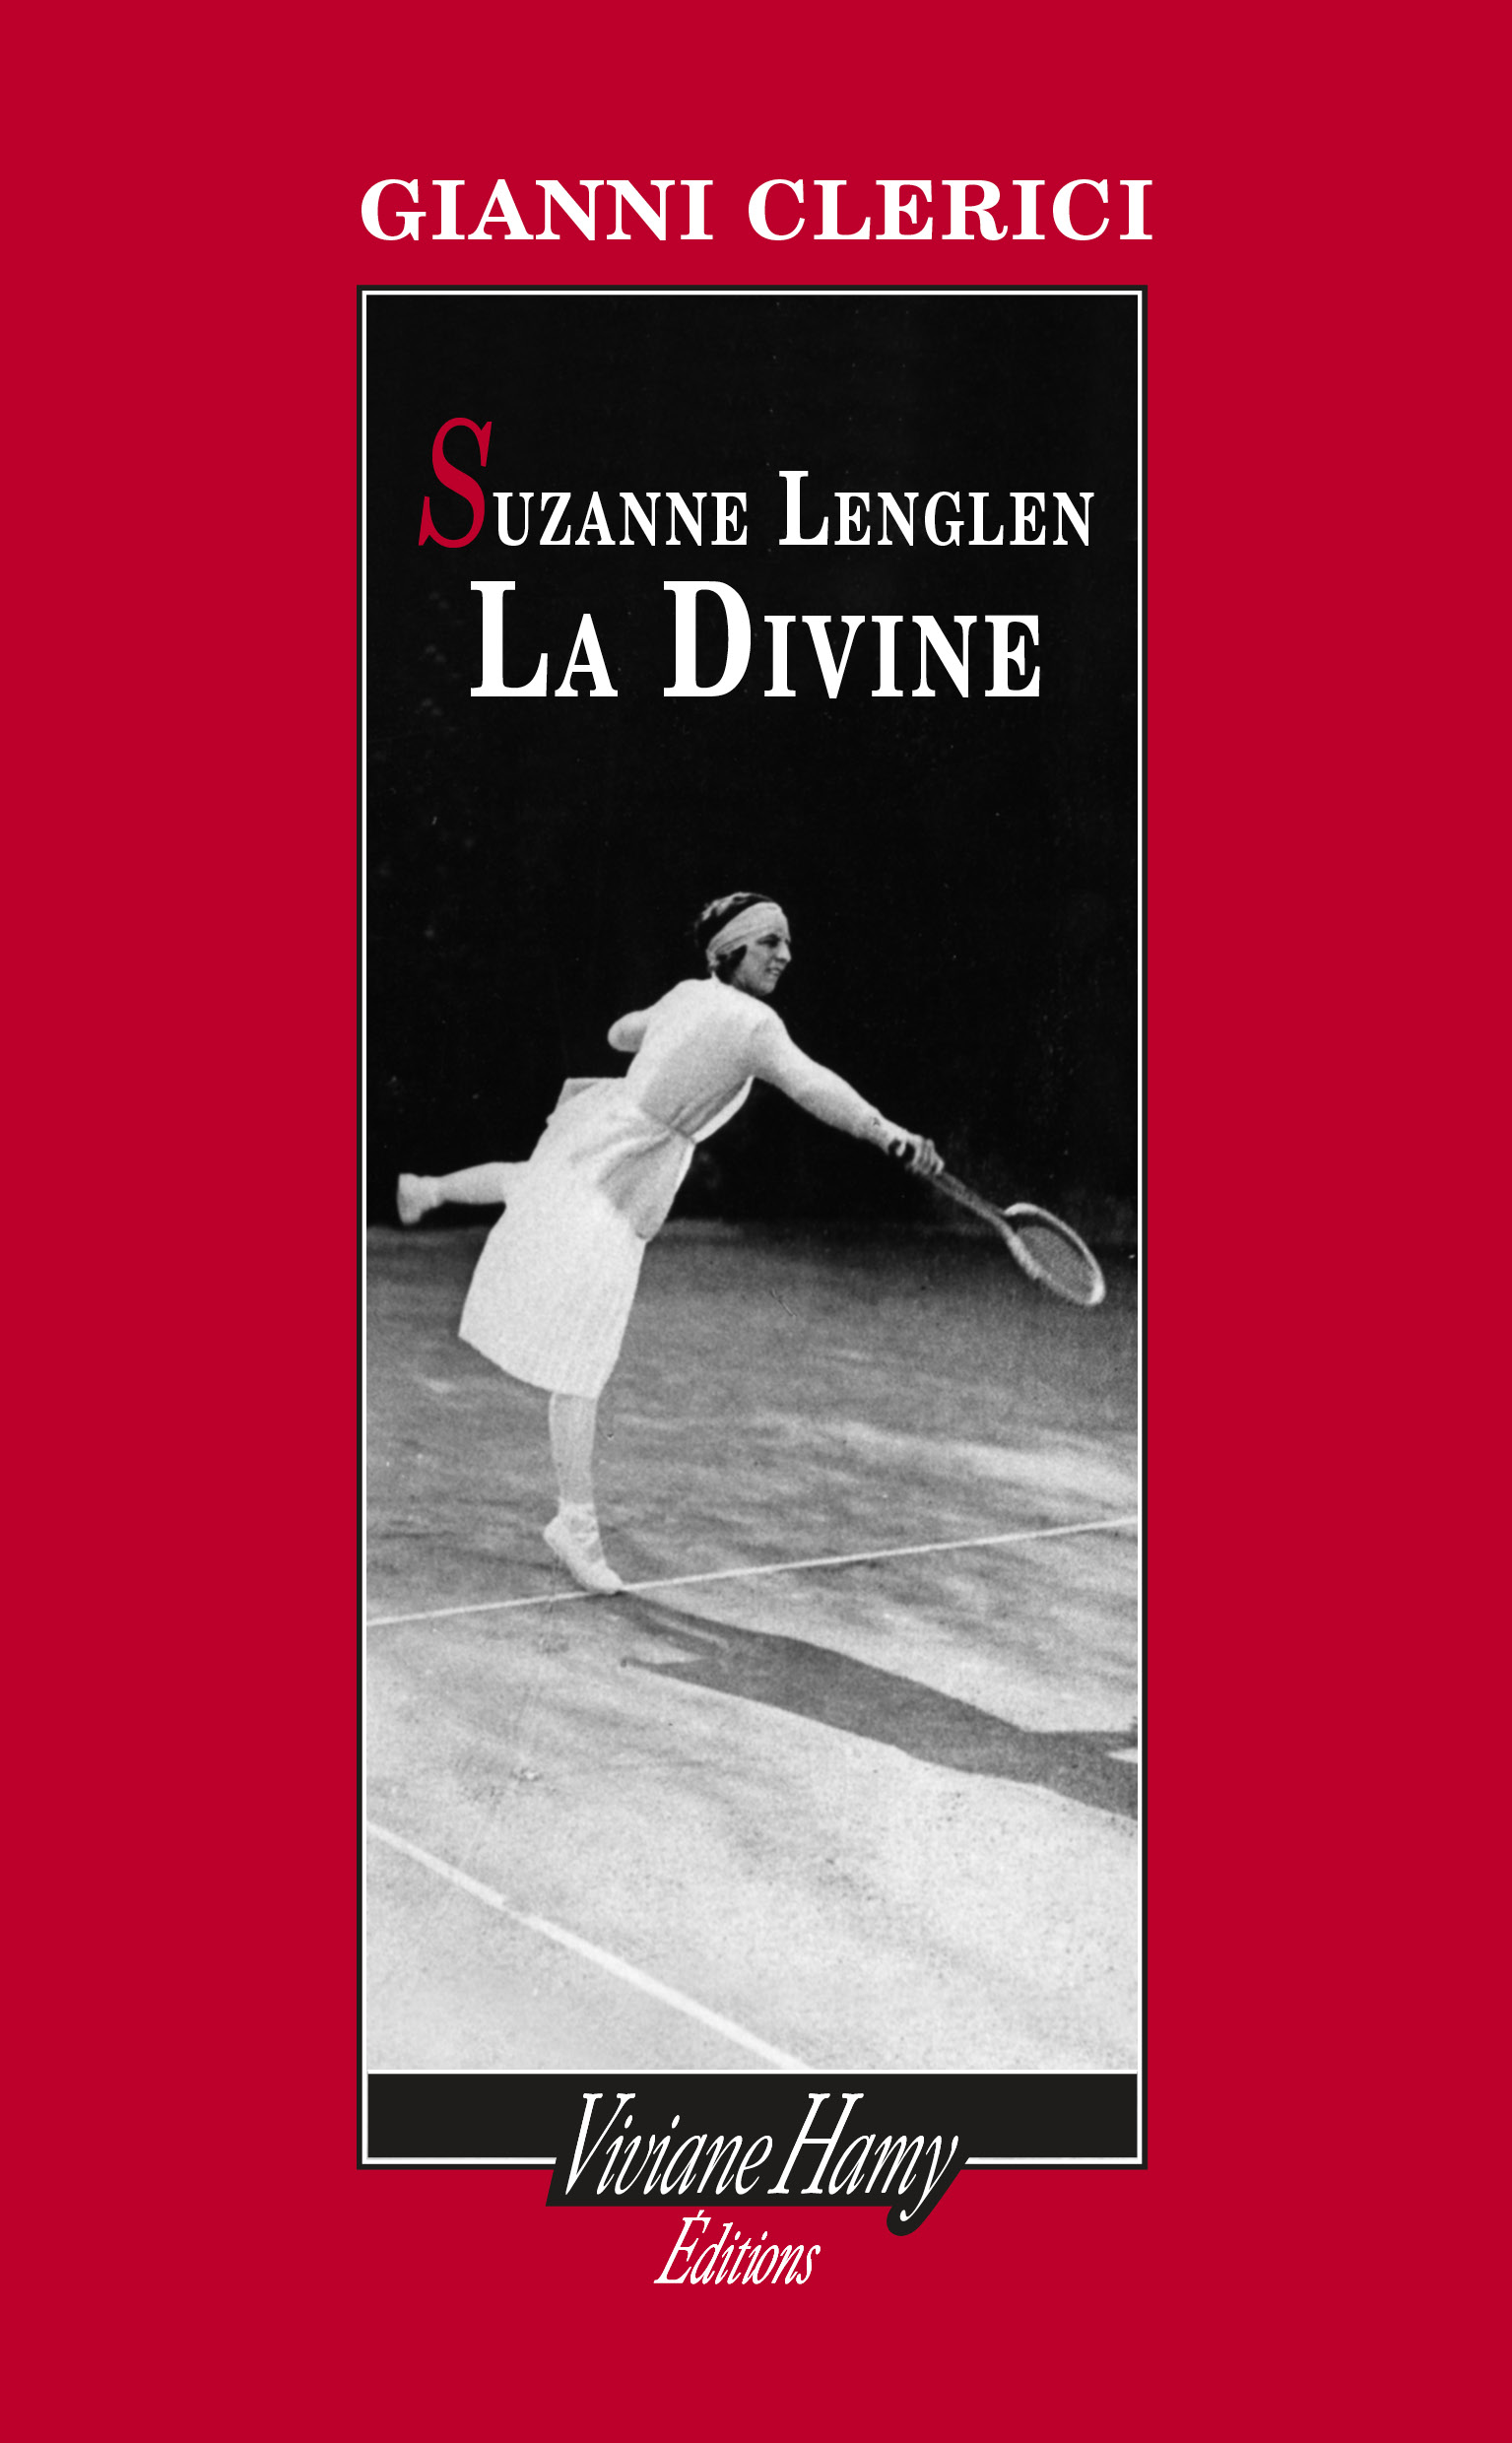 Afficher "Suzanne Lenglen la Divine"